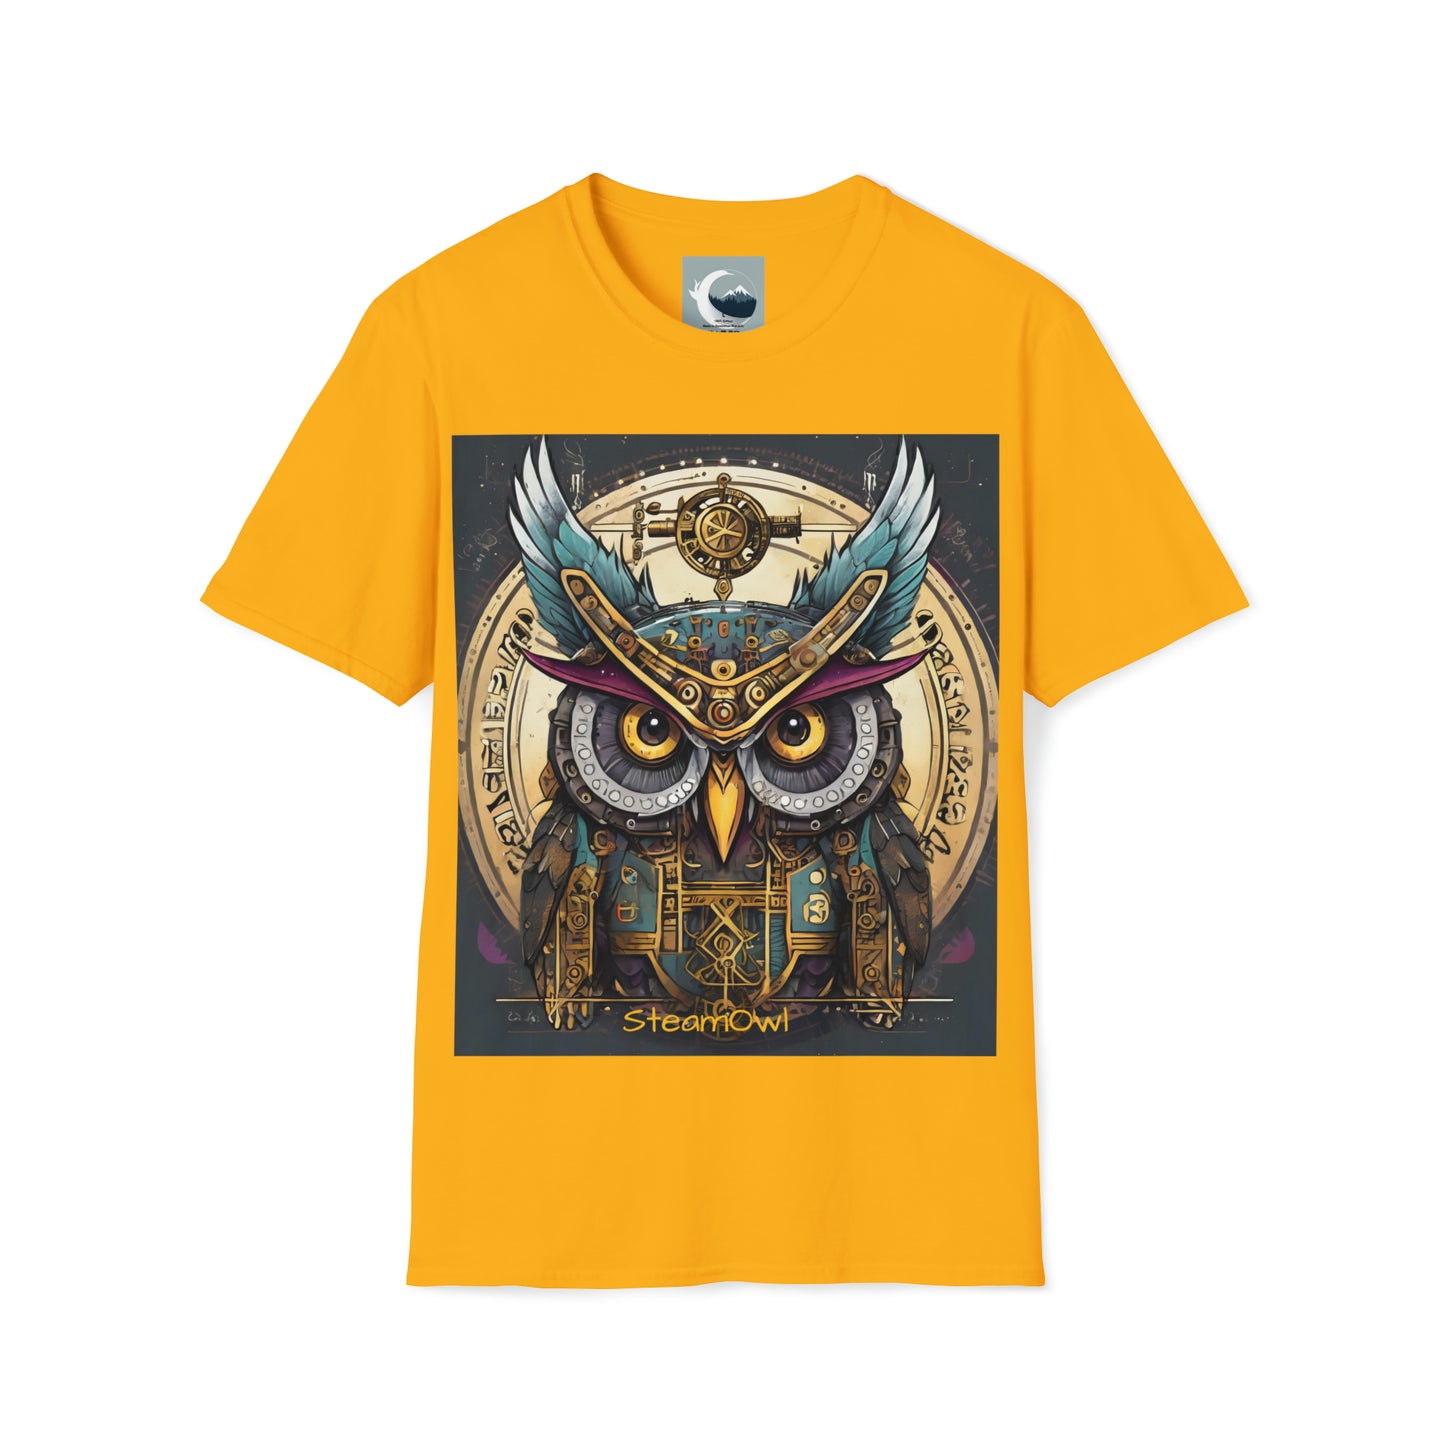 Unisex Adult Softstyle T-Shirt Owl-Inspired Steampunk Wear tshirt